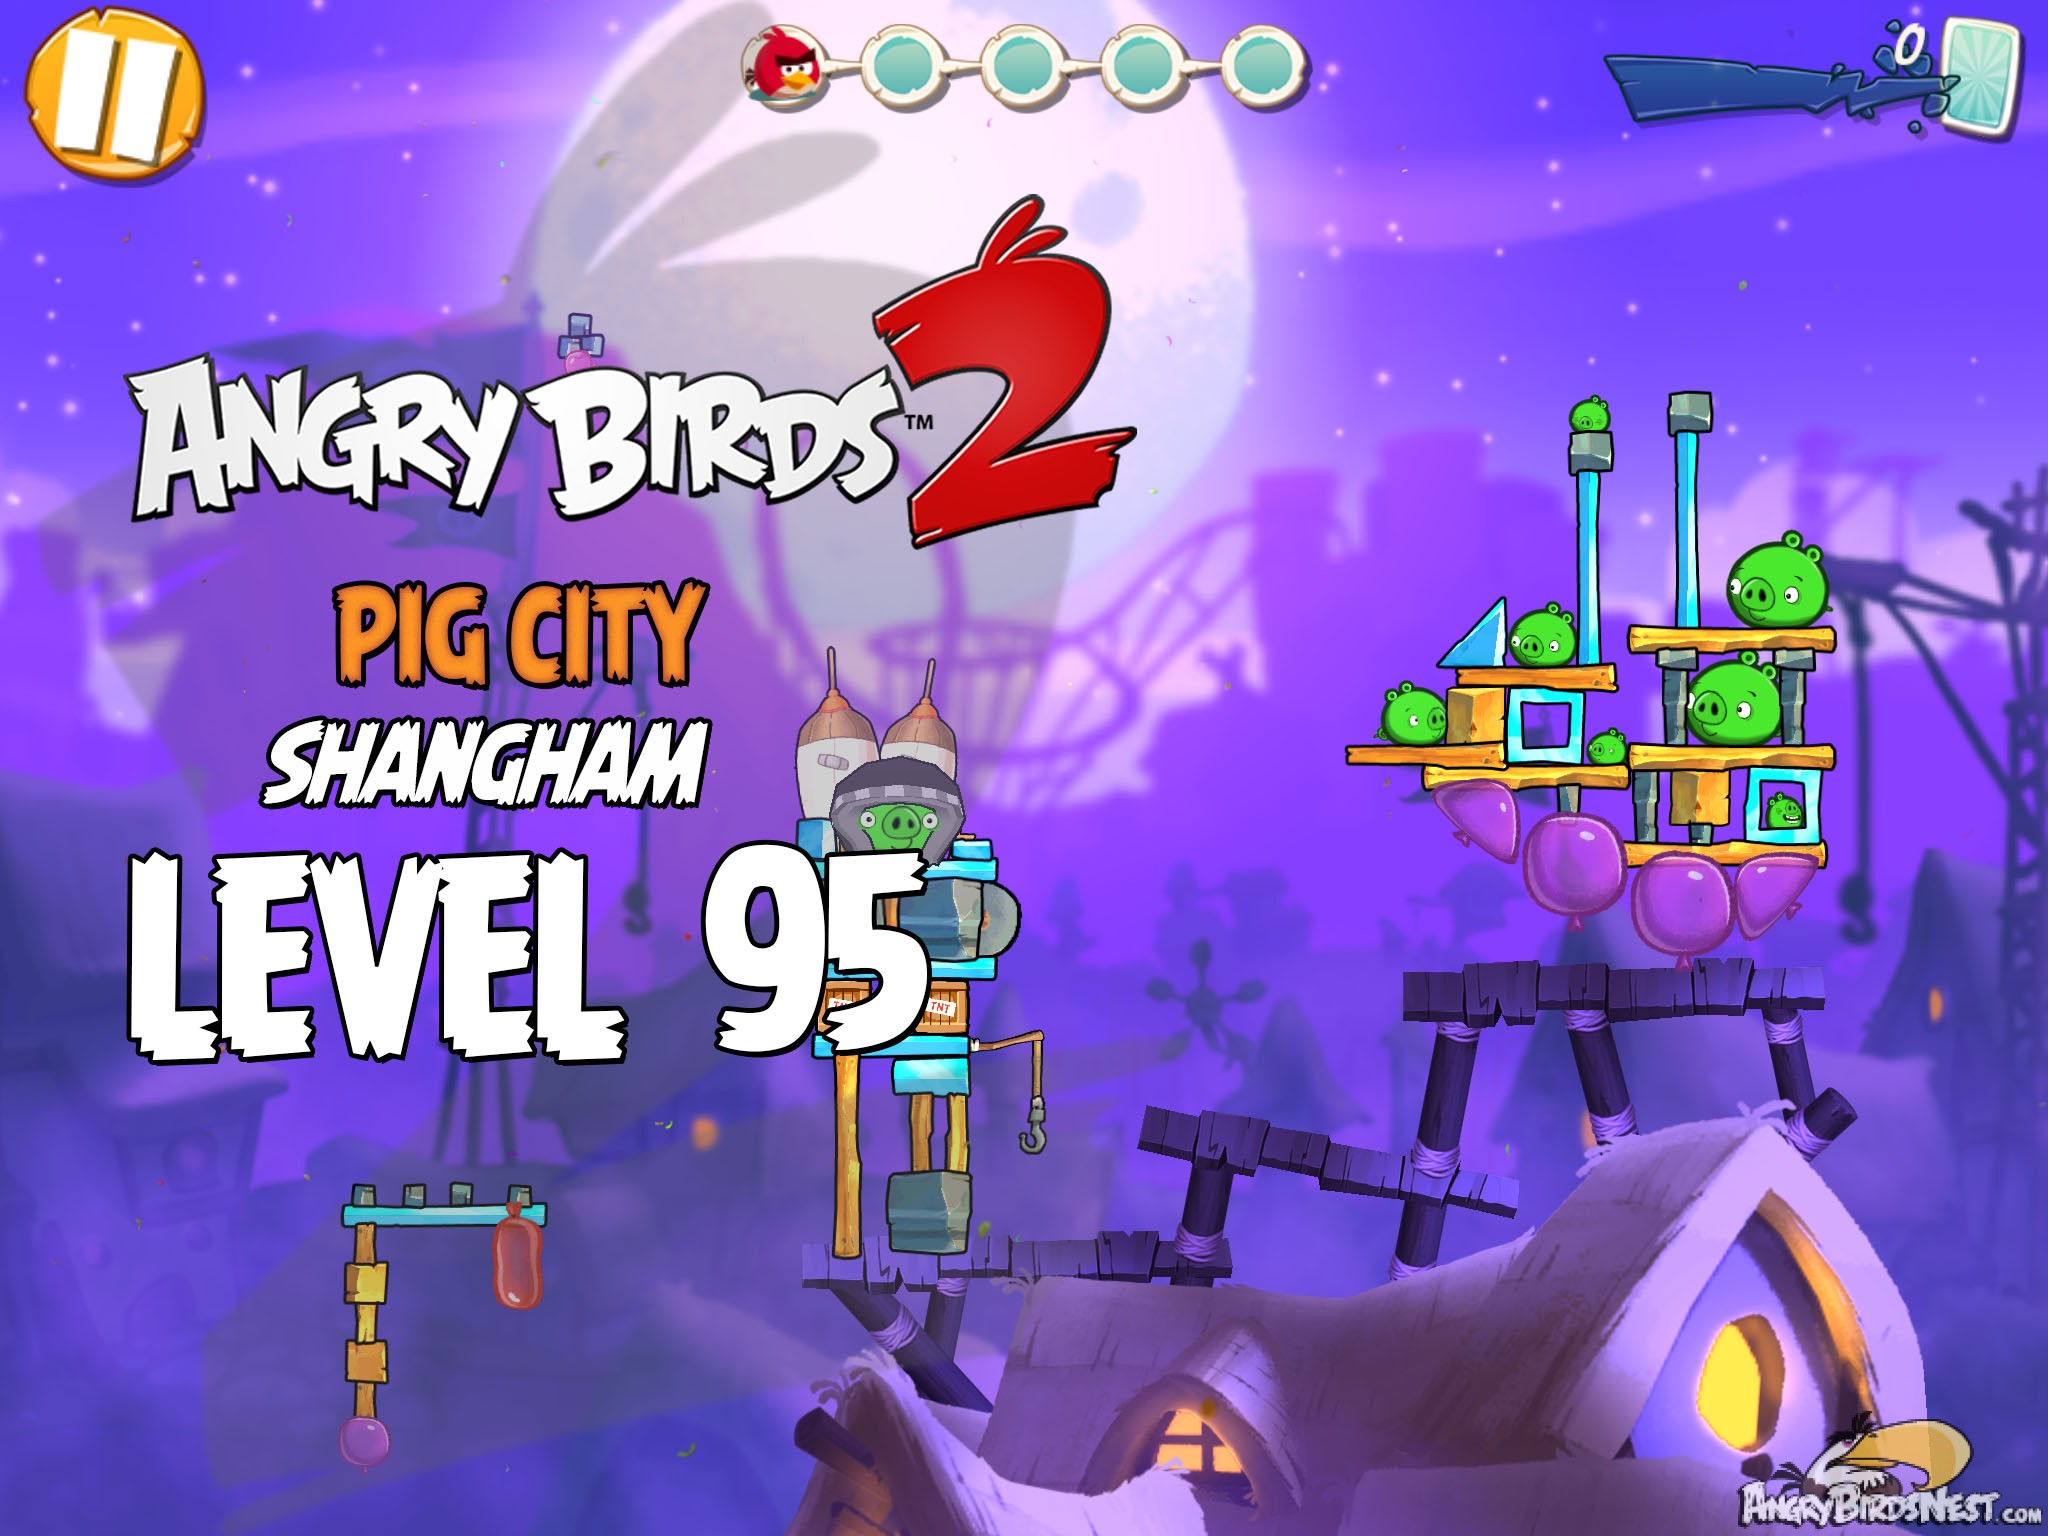 Angry Birds 2 Pig City Shangham Level 95